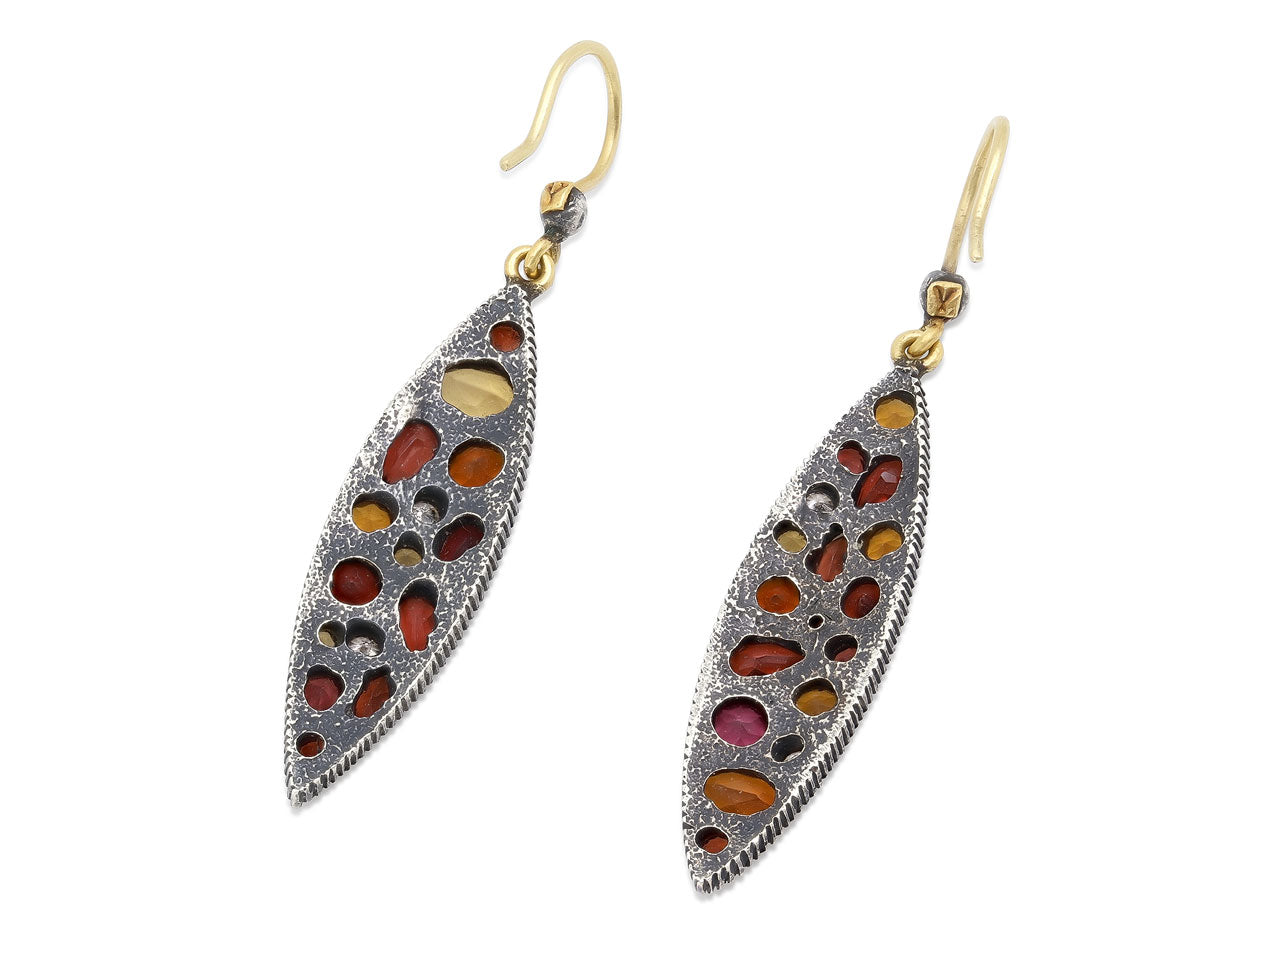 Multi-Colored Gemstone Earrings in Blackened Silver, by Yossi Harari